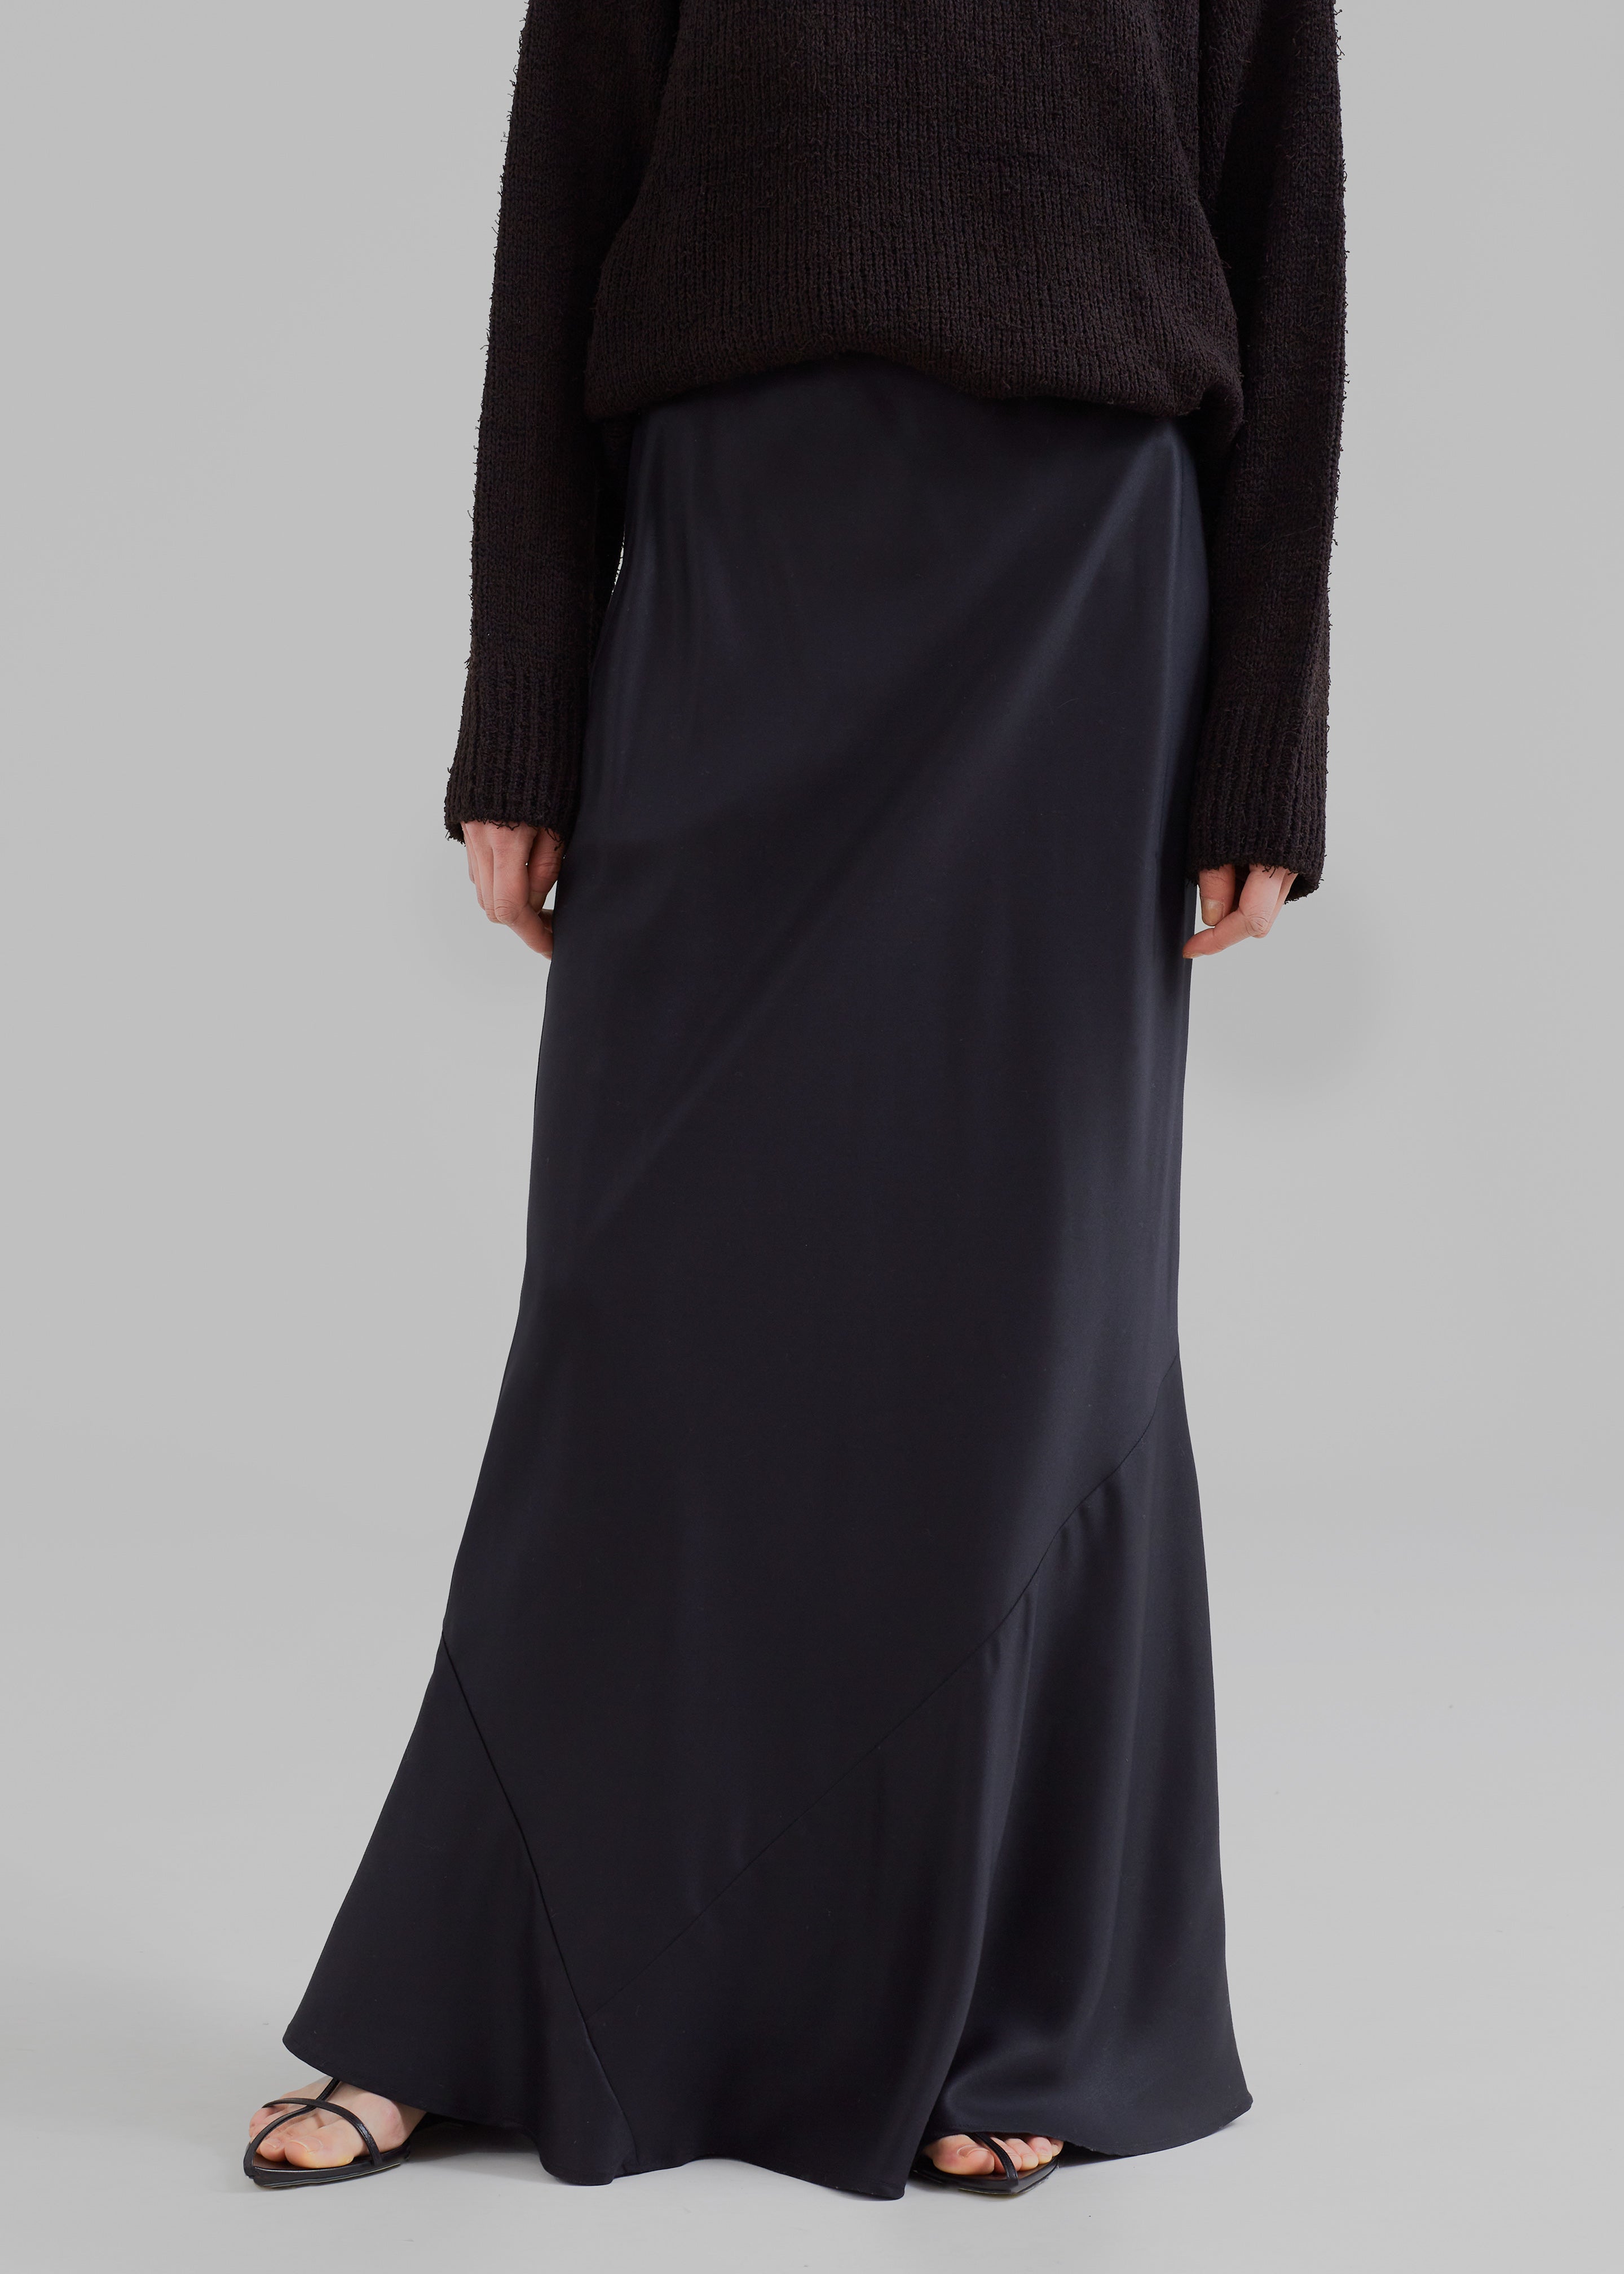 The Garment Bel Air Skirt - Black - 2